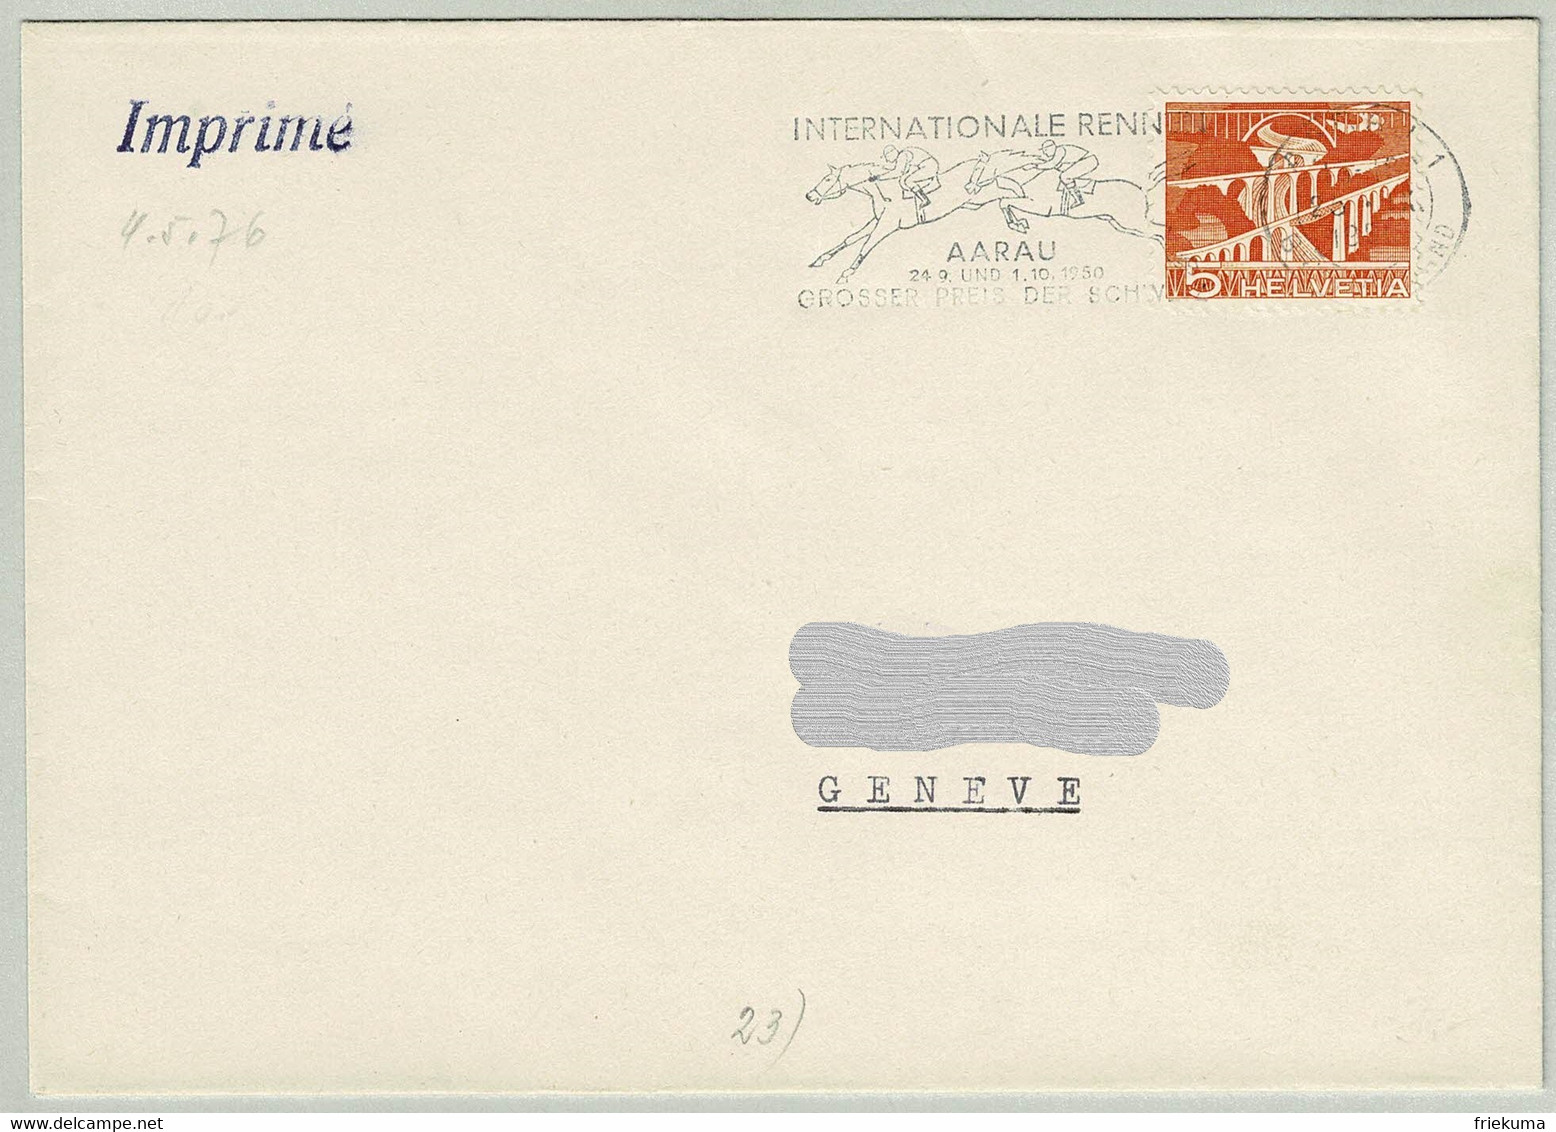 Schweiz / Helvetia 1950, Brief Grosser Preis Der Schweiz Aarau - Genève, Springreiten/Saut D'obstacles/Show Jumping - Hípica